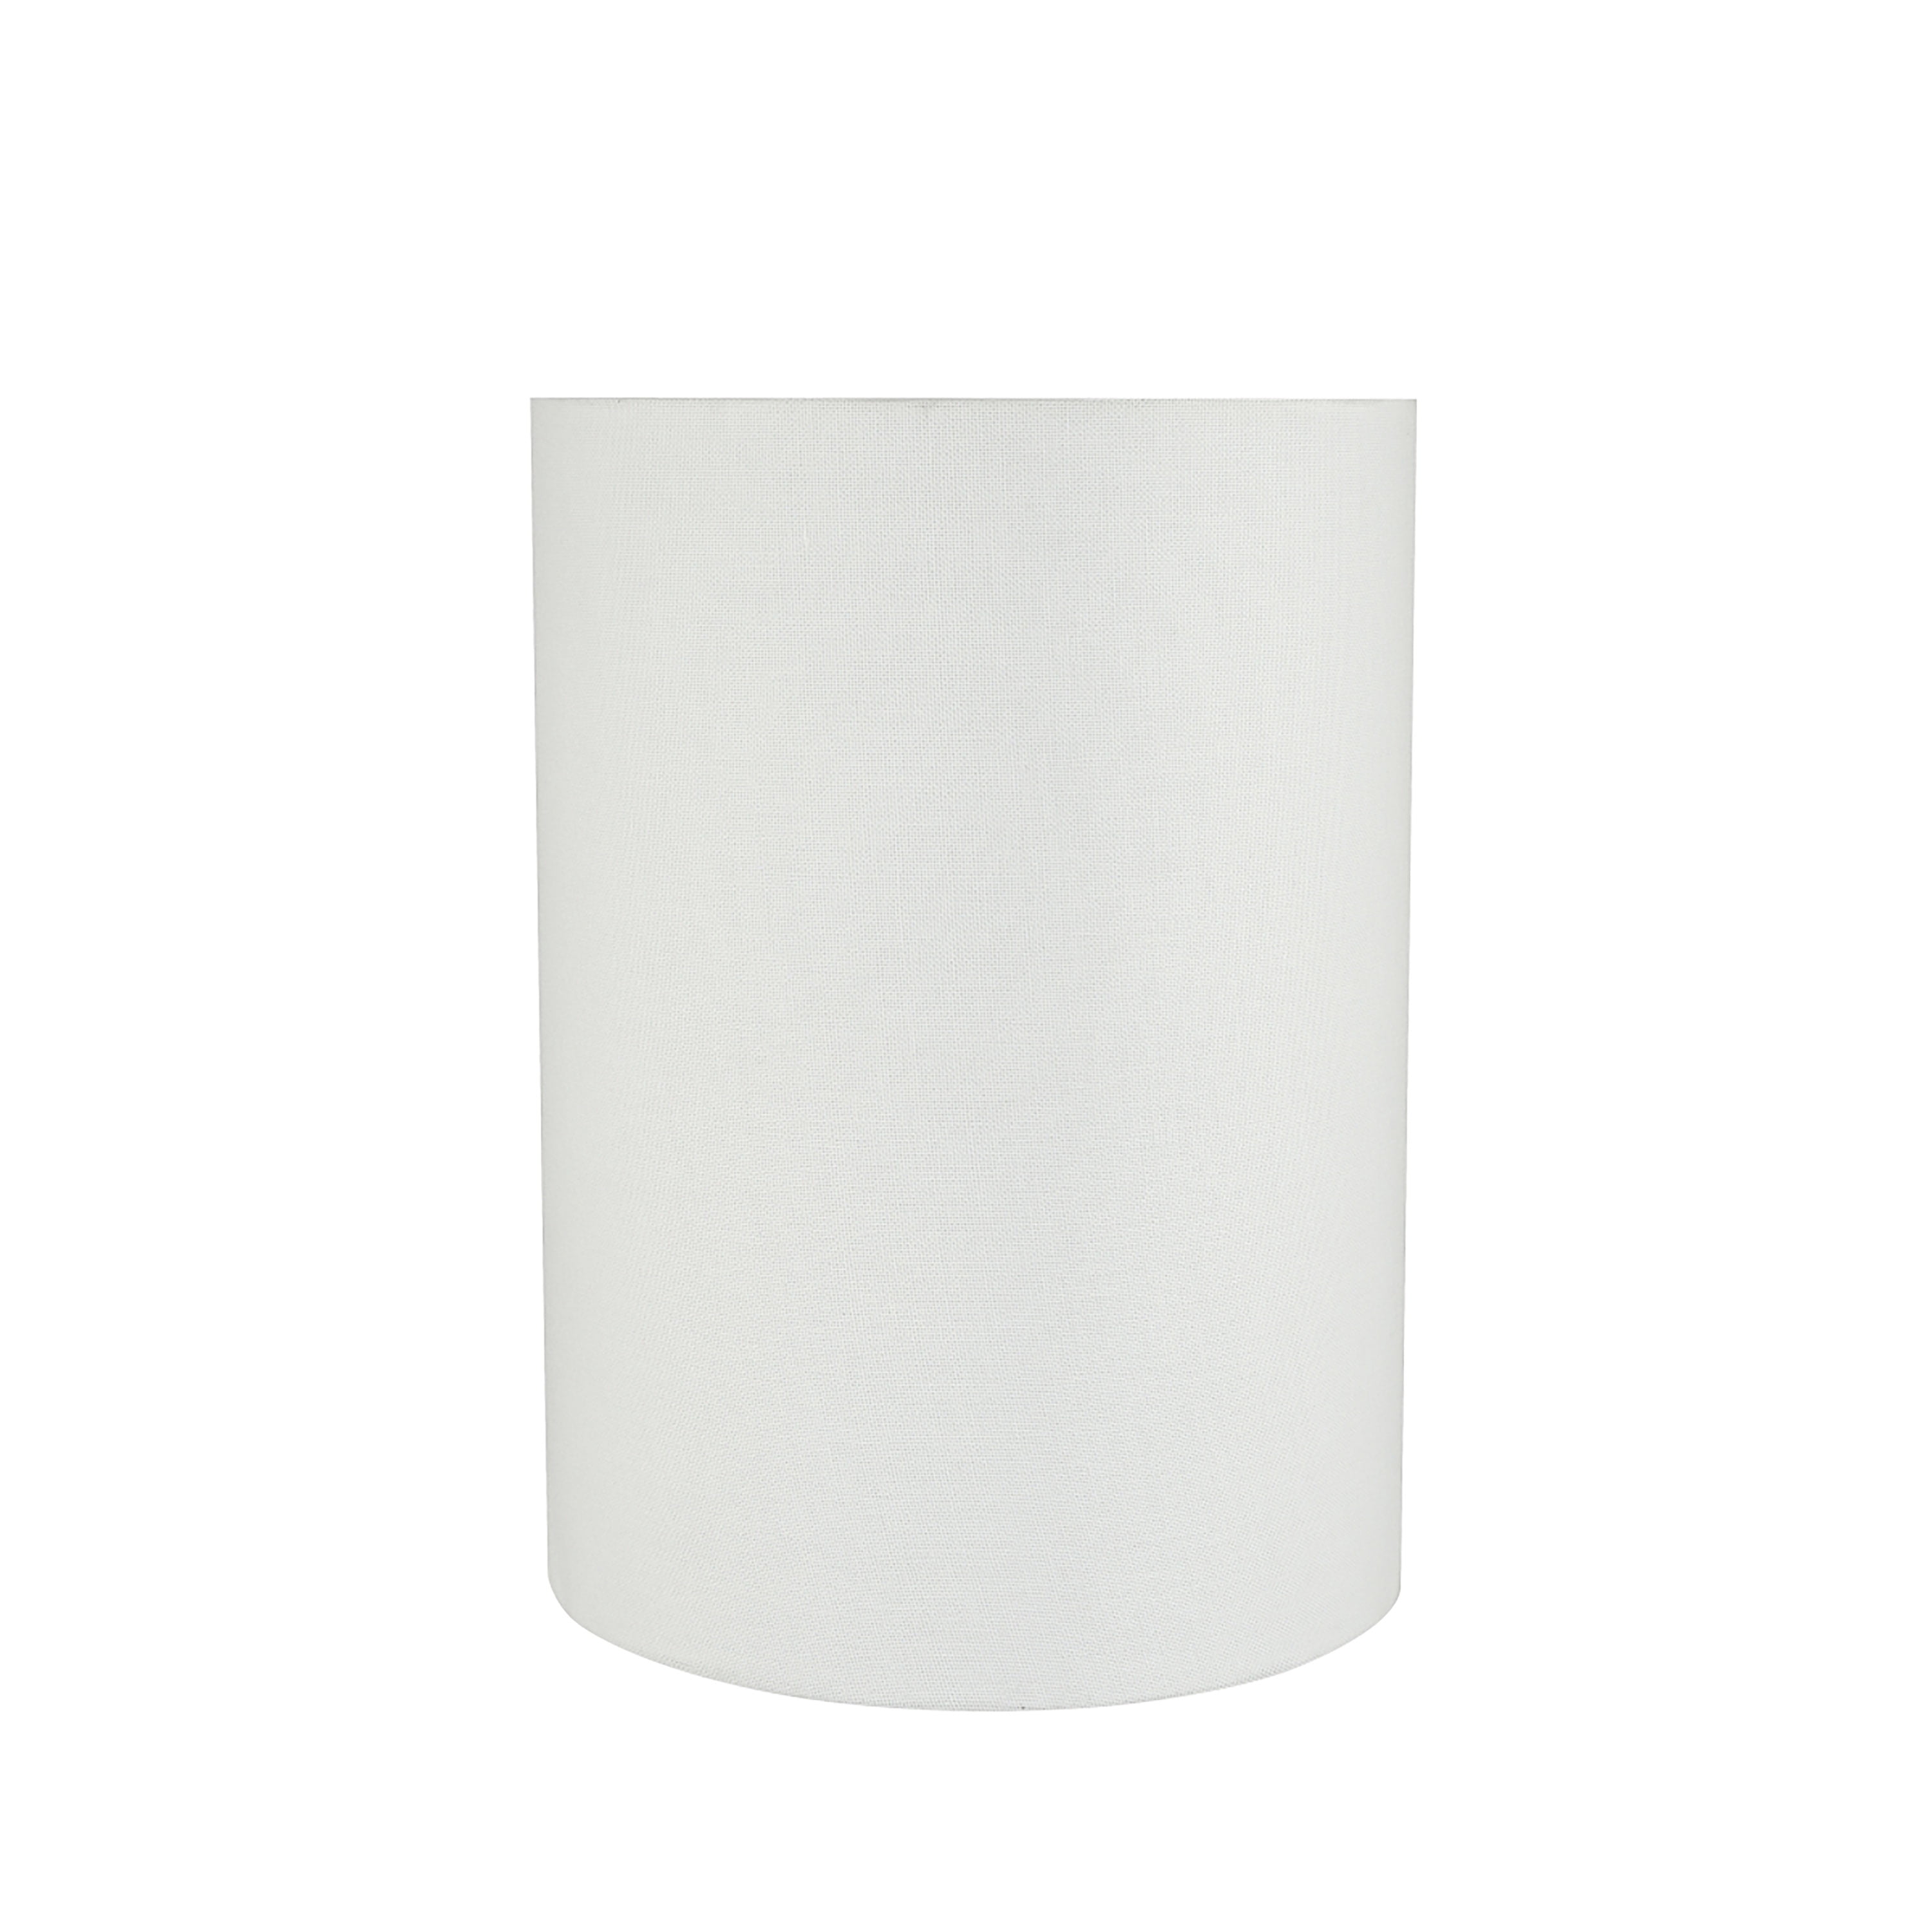 Hardback Linen Drum Cylinder Lamp Shade 8 x 8 x11 Spider Construction Black White Scale 